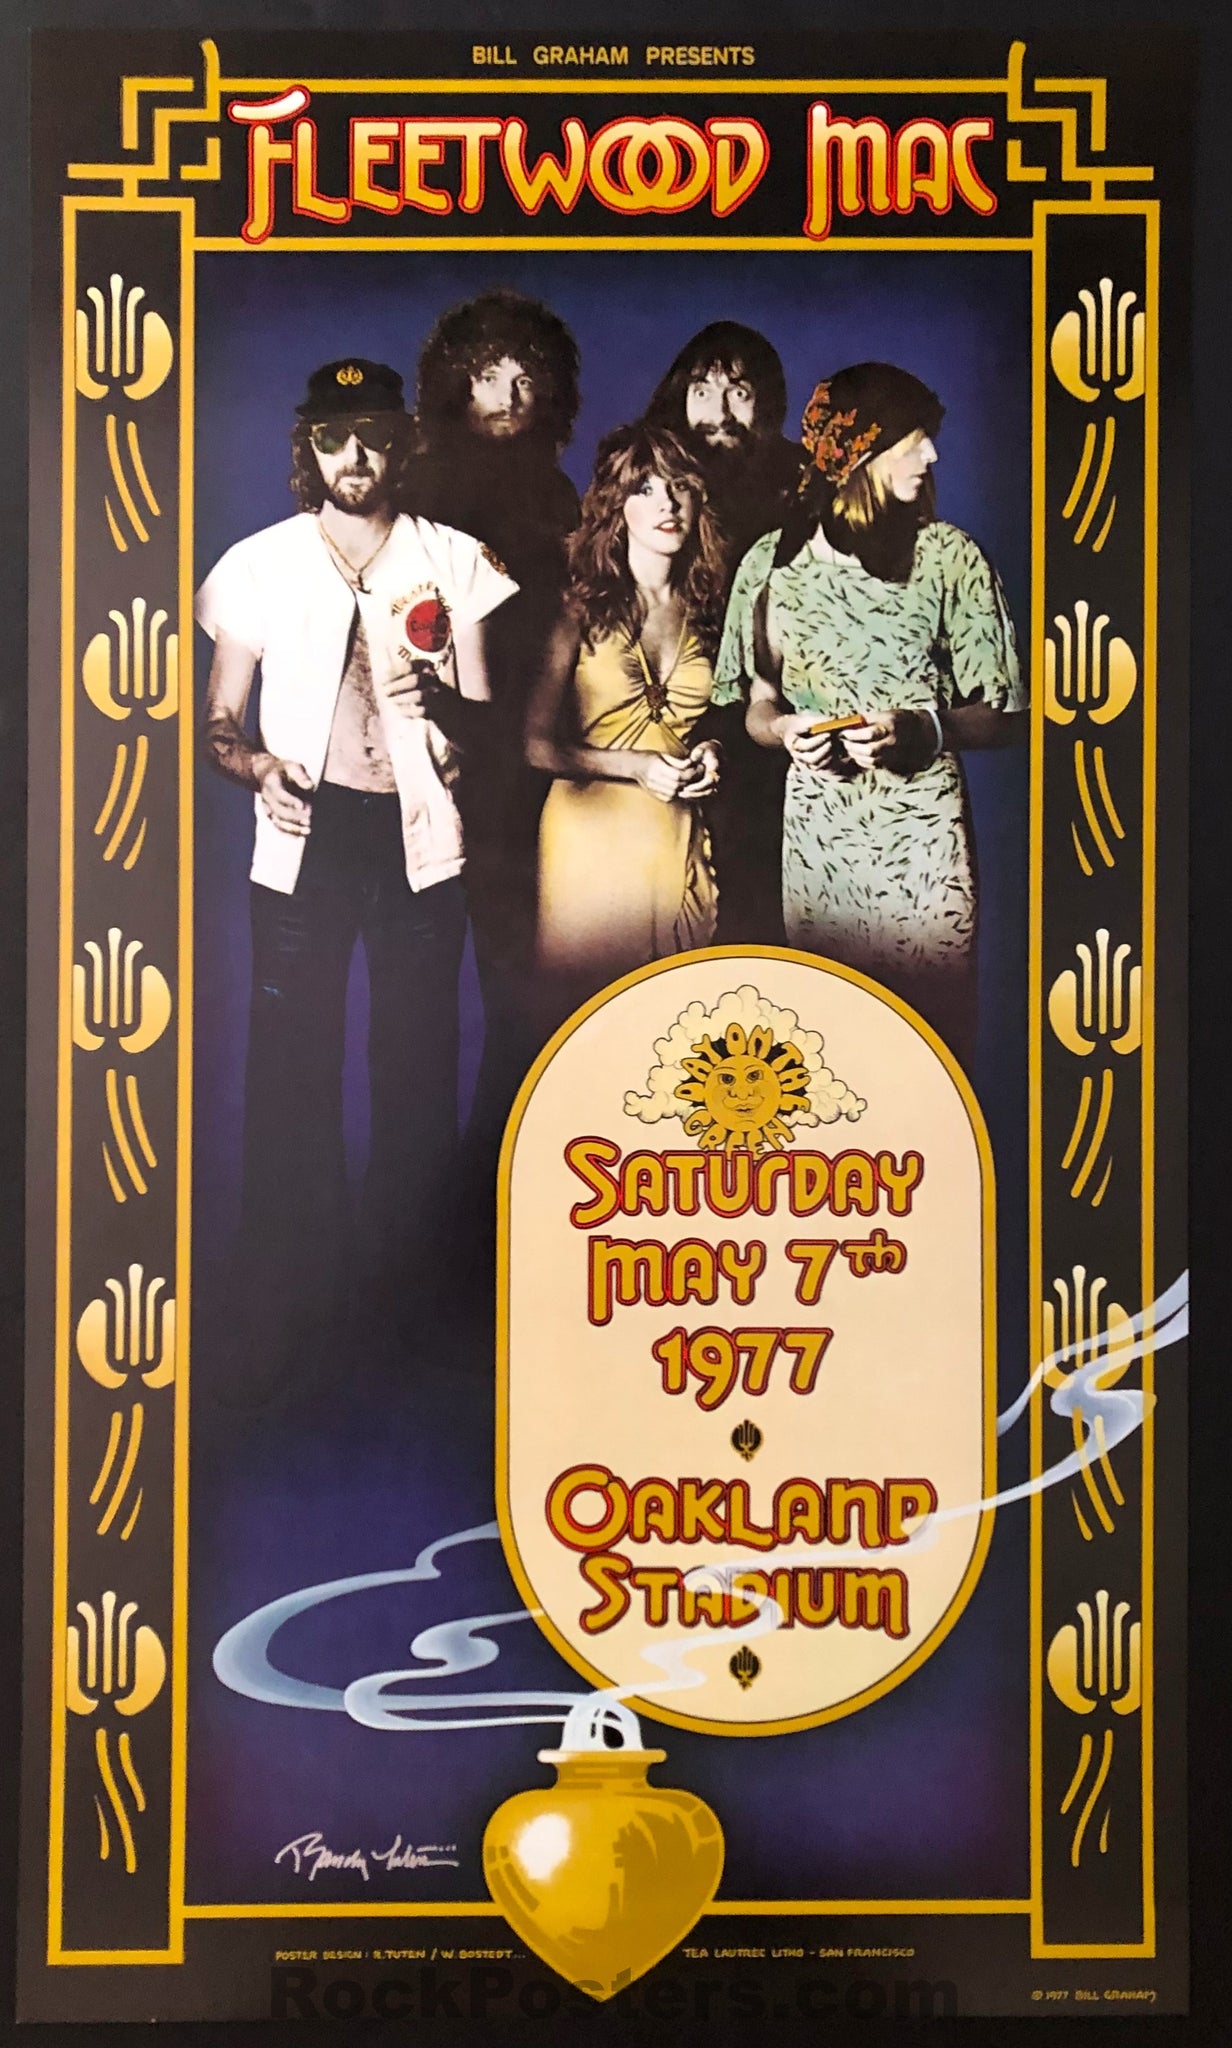 AUCTION - Fleetwood Mac - Randy Tuten Signed - 1977 Poster - Oakland Stadium - Mint